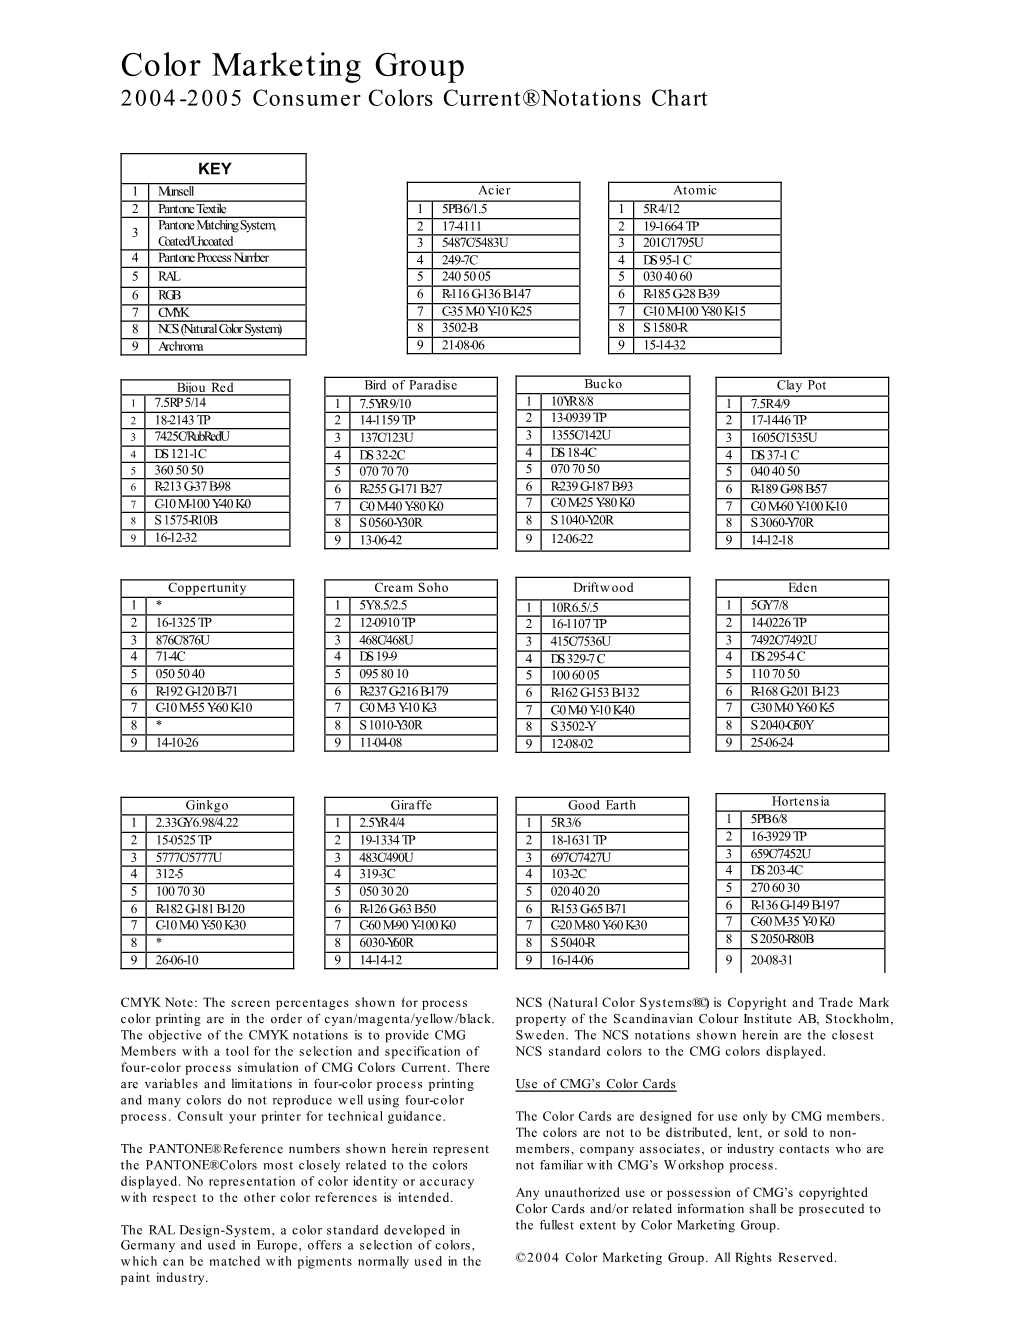 2004-2005 Consumer Colors Current Notations